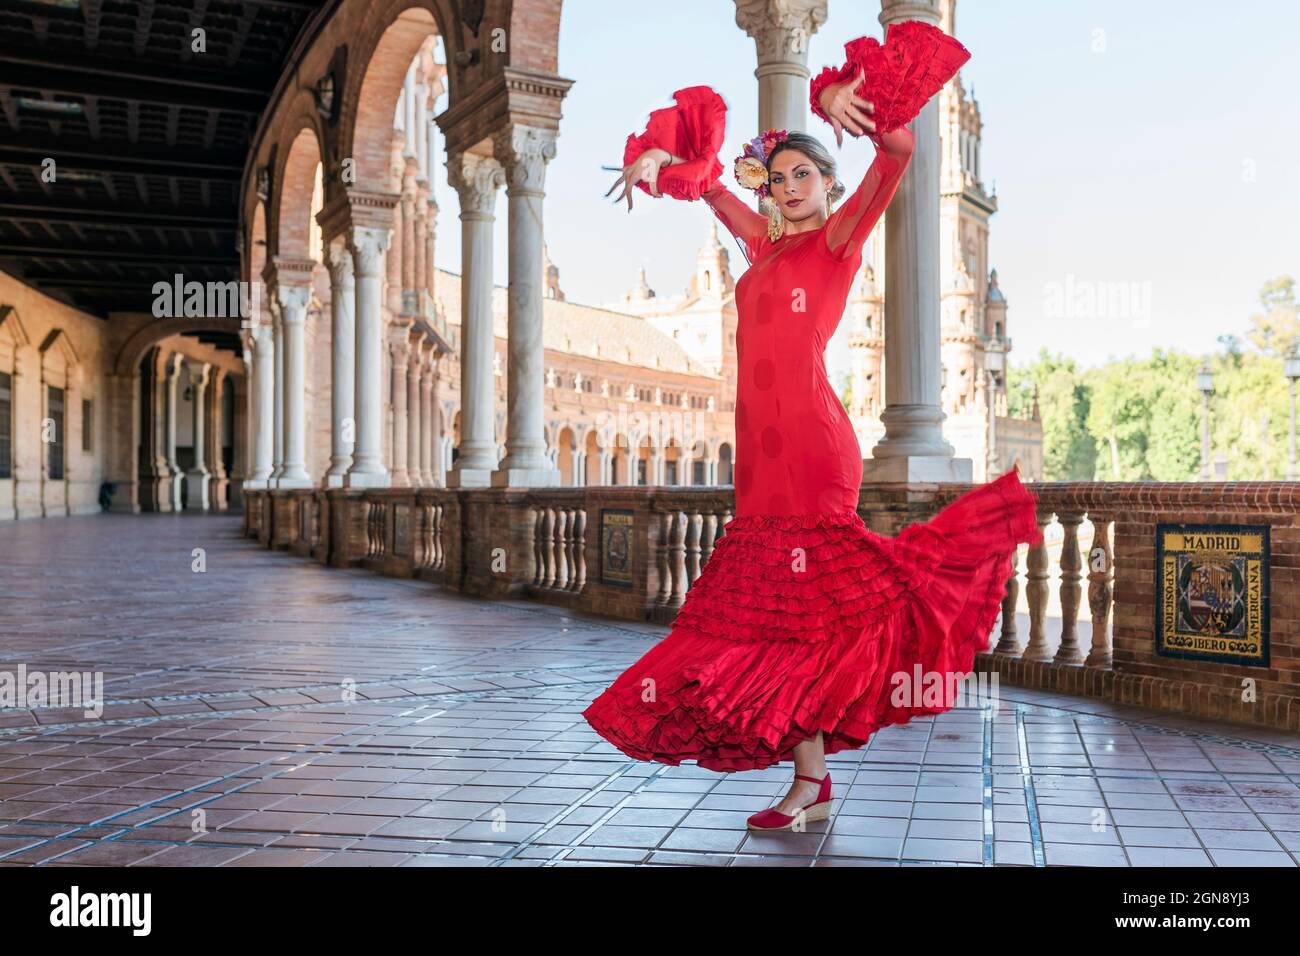 Female flamenco artist dancing with hands raised on walkway at Plaza De Espana, Seville, Spain Stock Photo